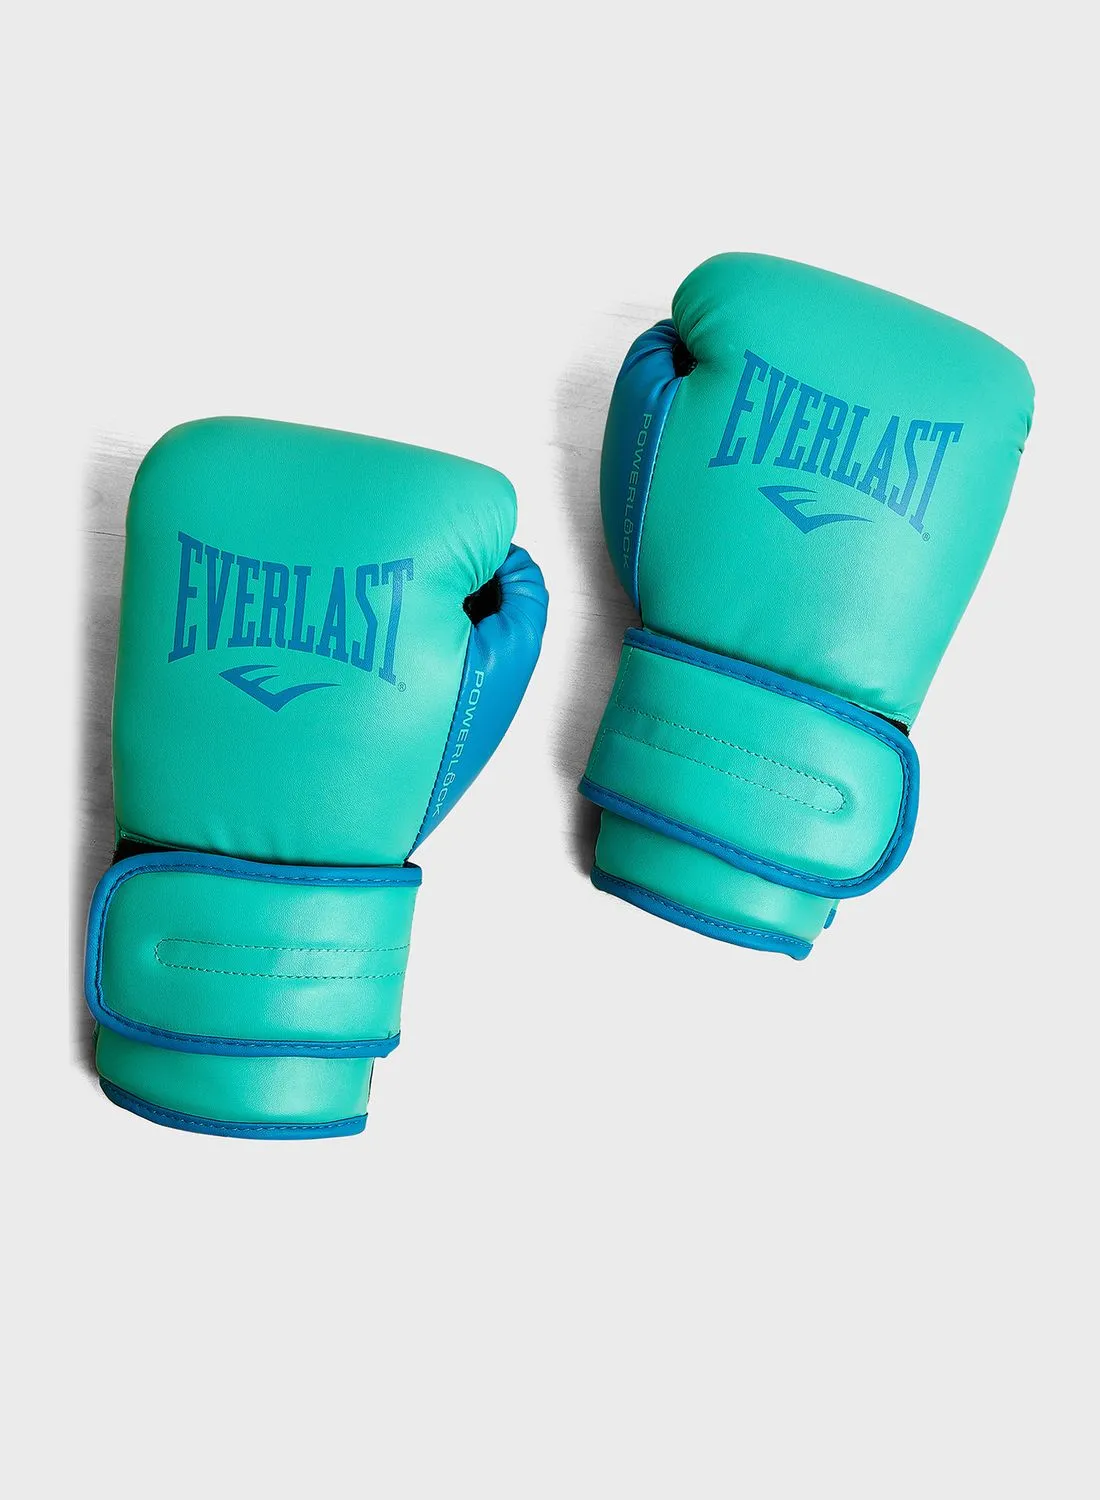 EVERLAST Powerlock 2 Training Gloves 14Oz